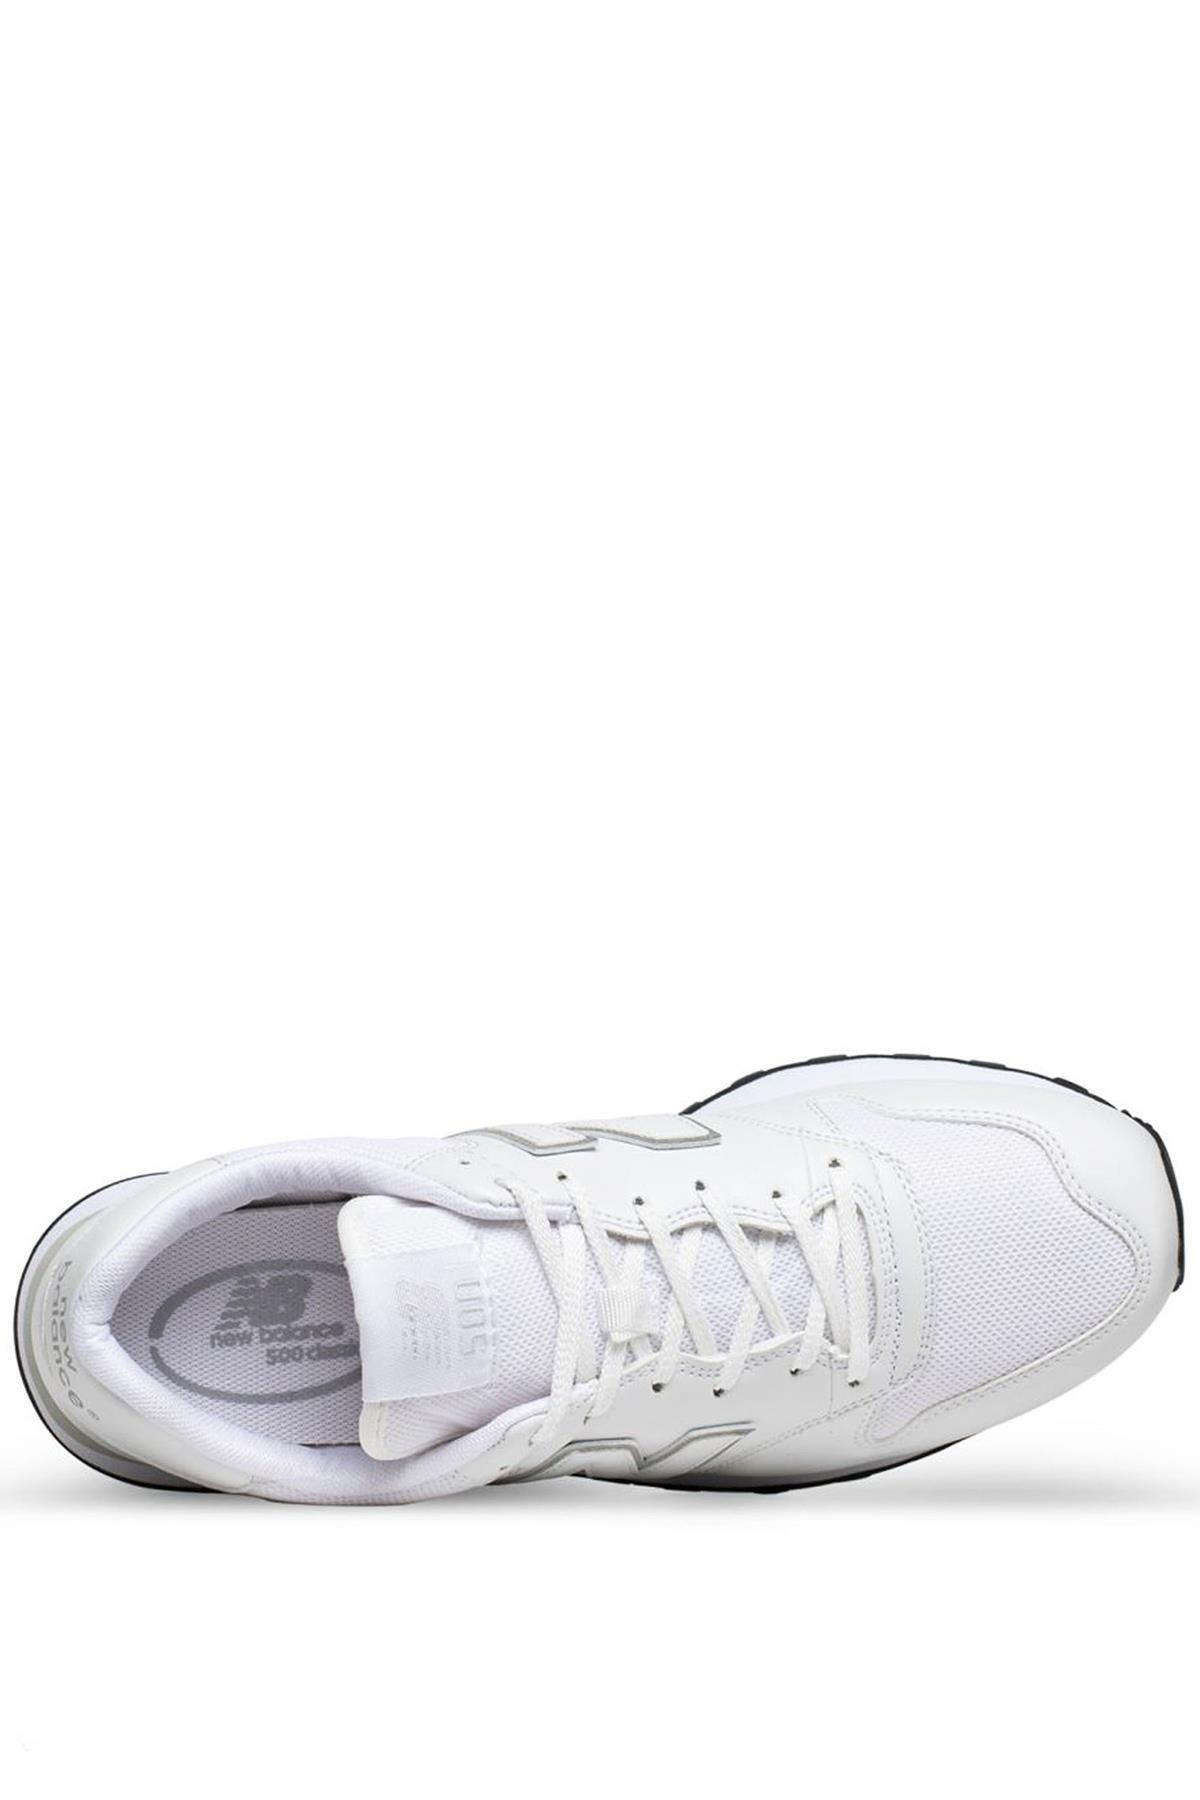 New Balance Gm500 - Erkek Sneaker Ayakkabı